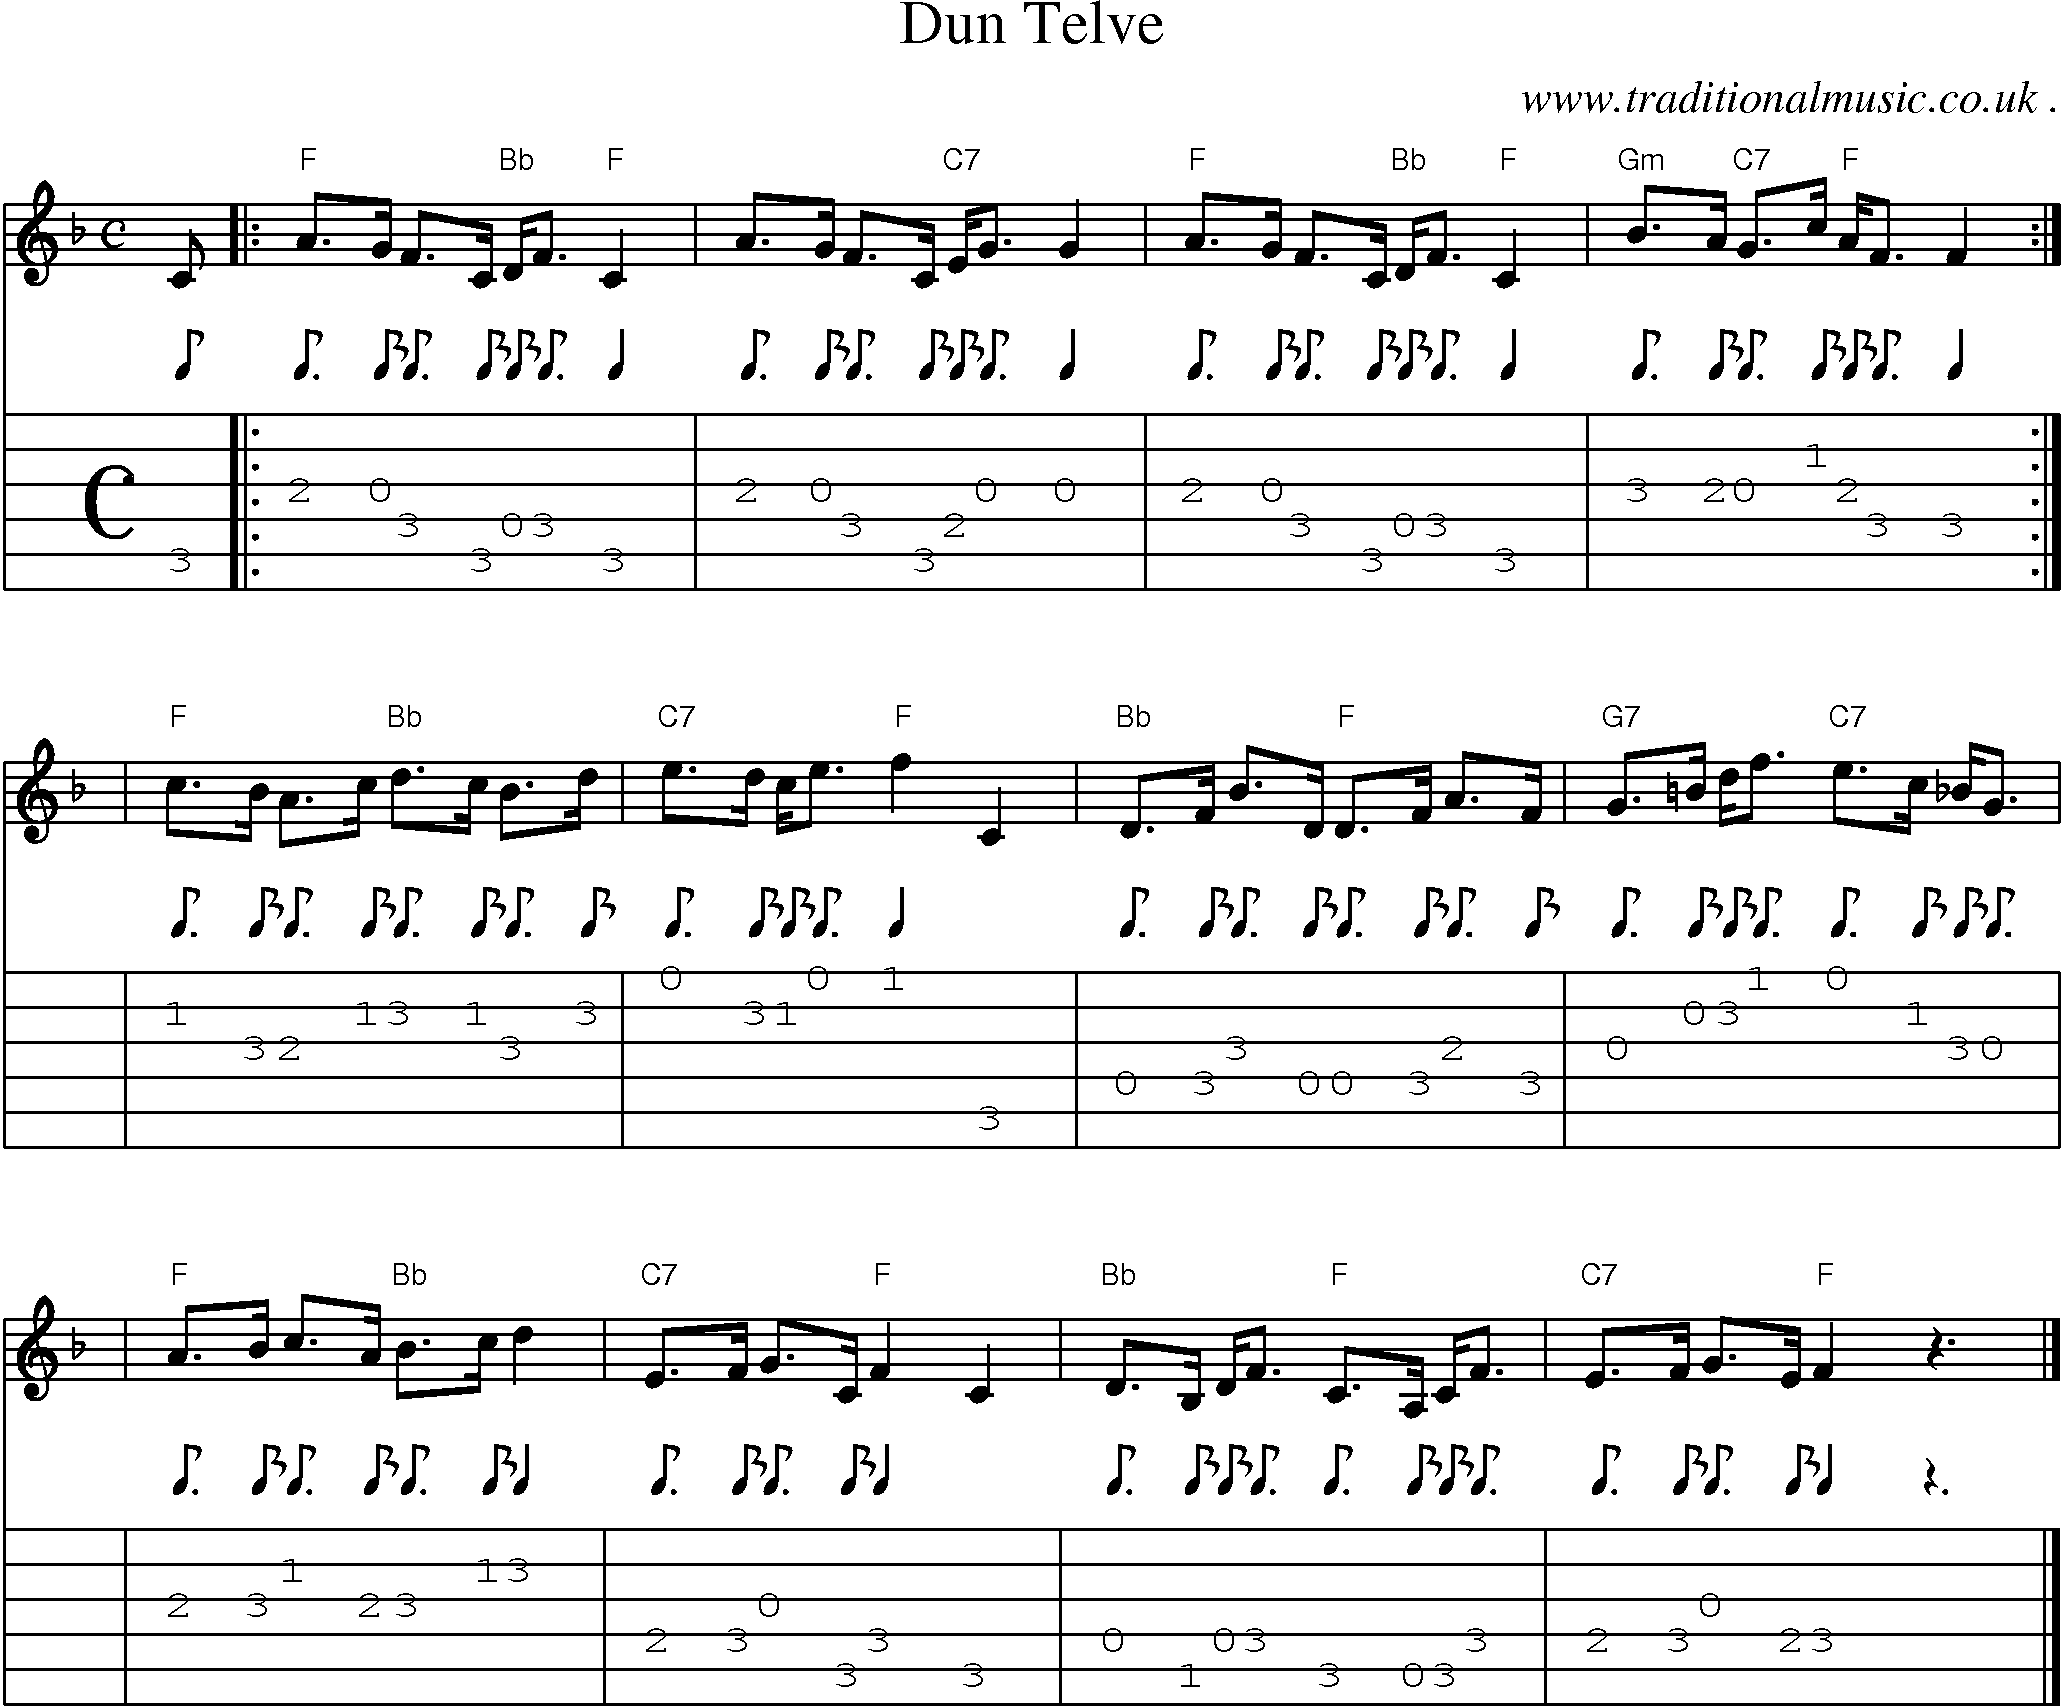 Sheet-music  score, Chords and Guitar Tabs for Dun Telve